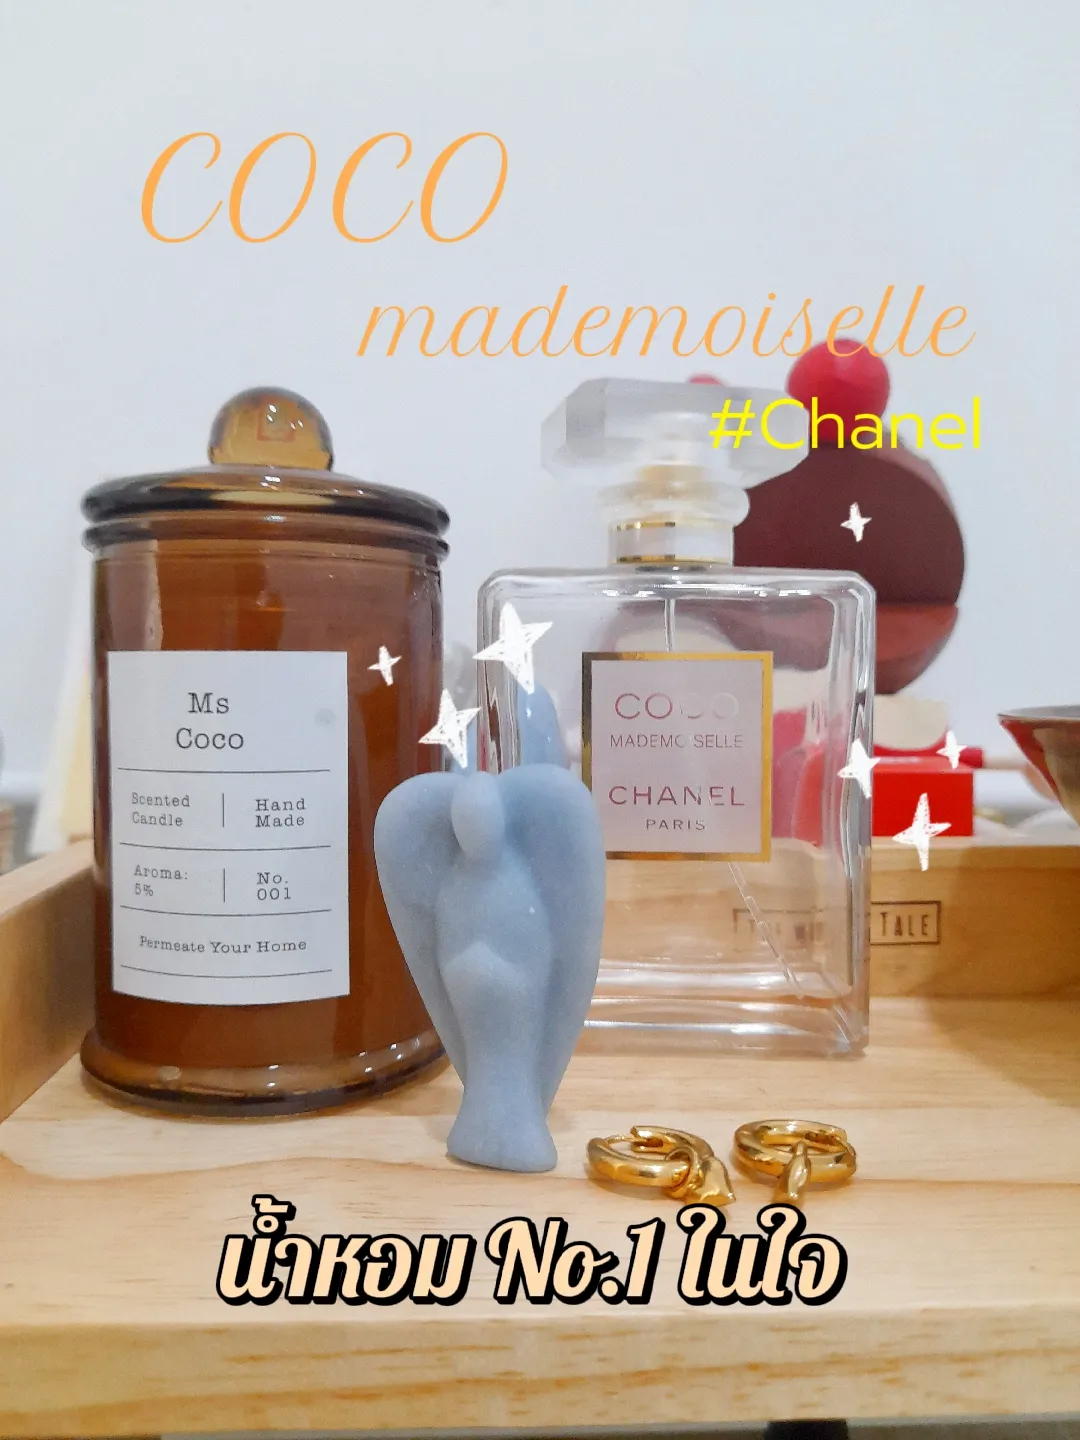 COCO mademoiselle love baby perfume